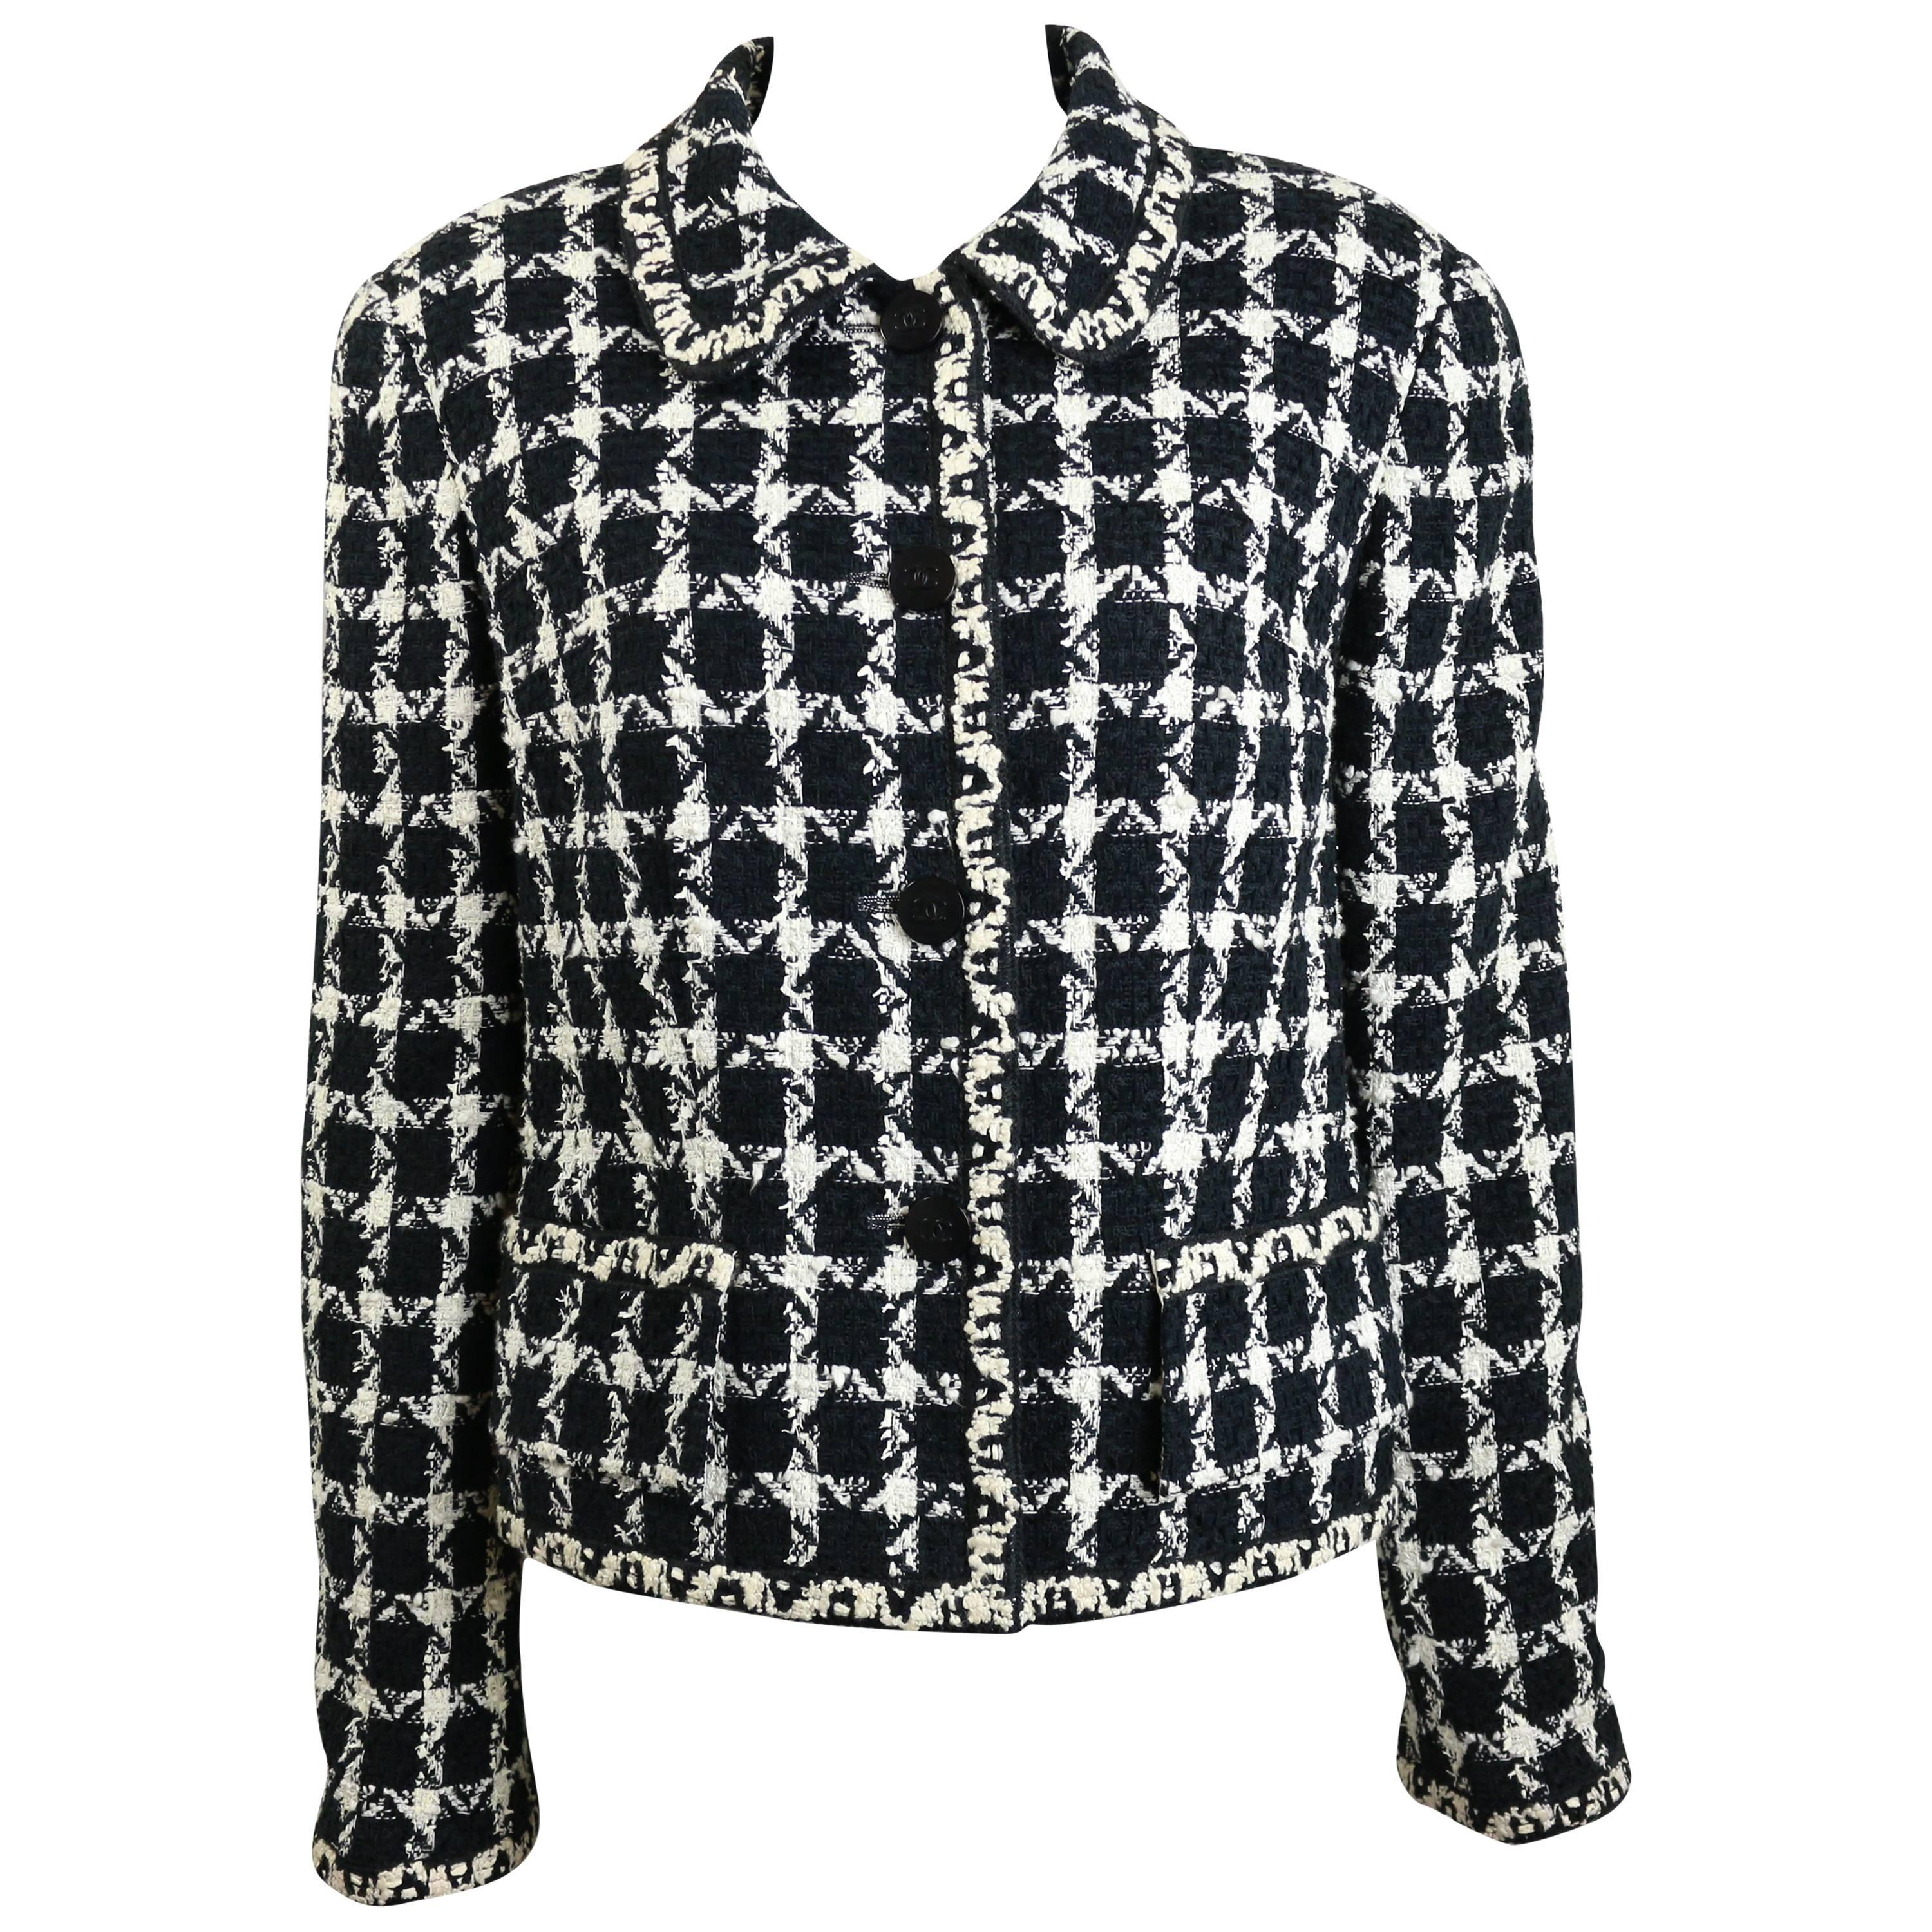 Chanel Black and White Net Overlay Tweed Jacket